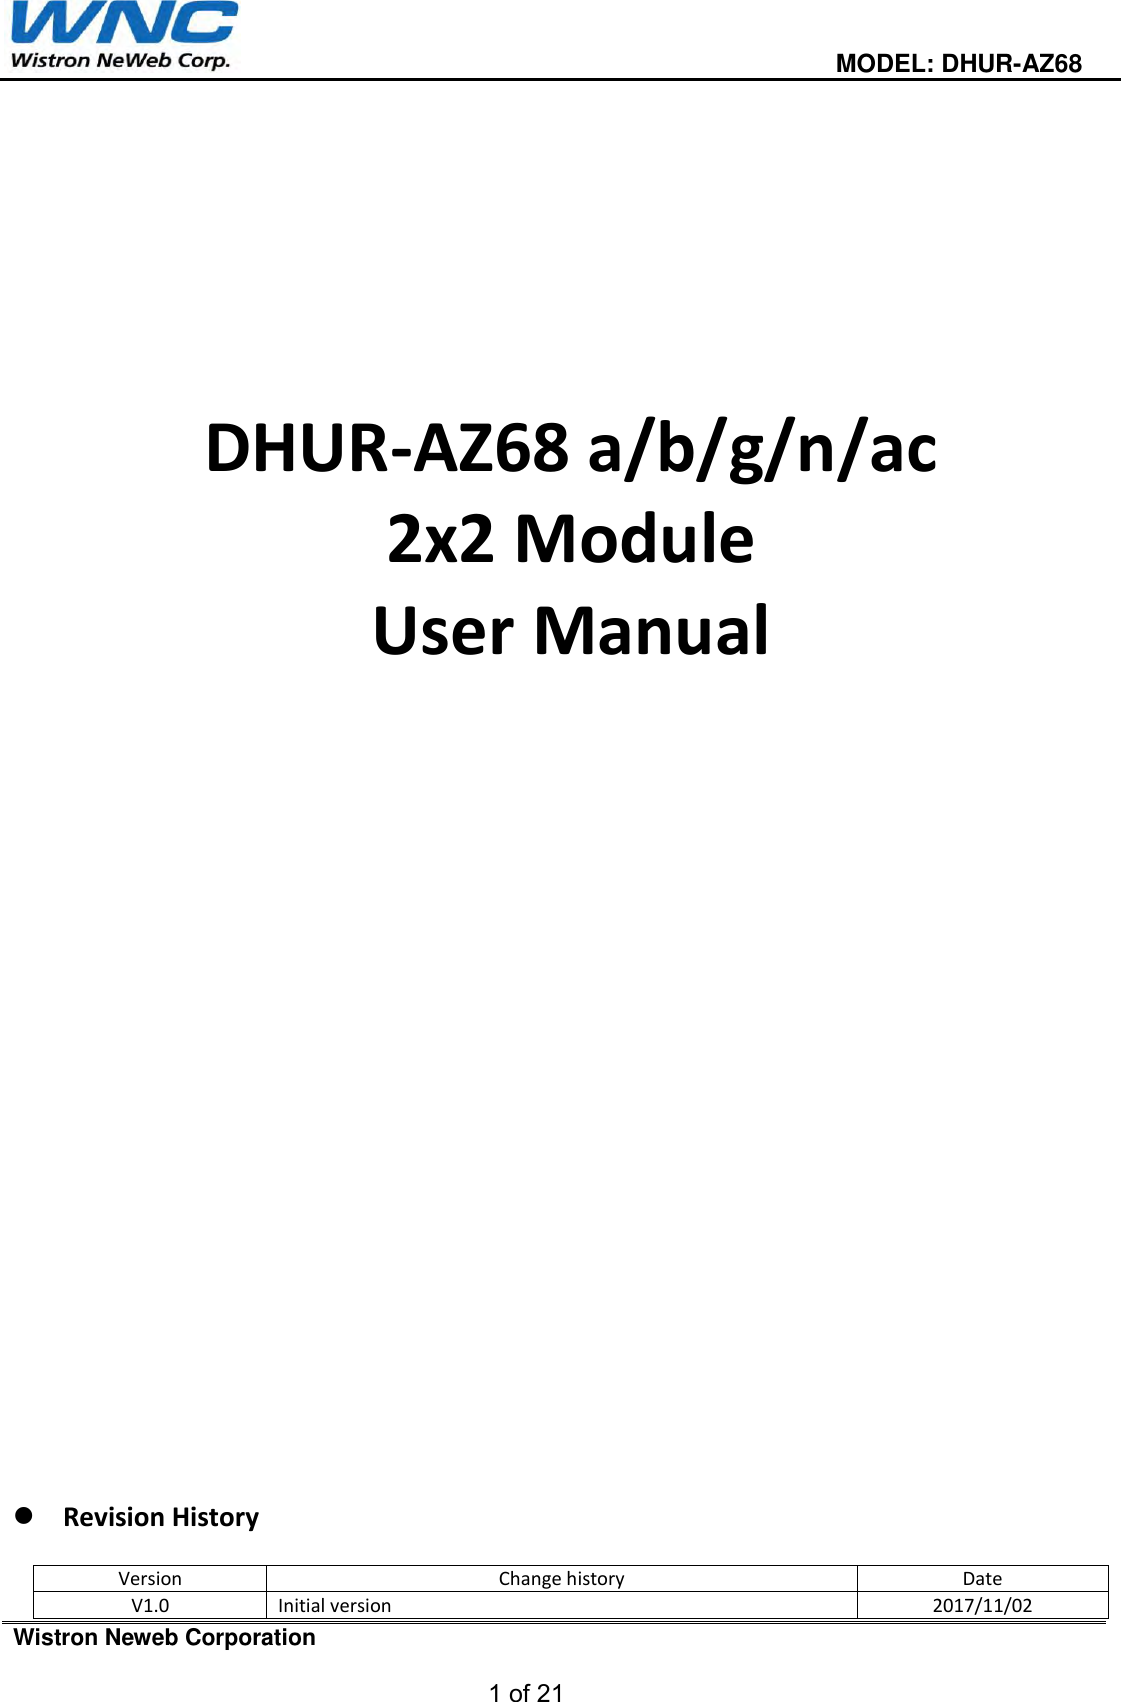                                                                                         MODEL: DHUR-AZ68  Wistron Neweb Corporation  1 of 21            DHUR-AZ68 a/b/g/n/ac 2x2 Module User Manual                             Revision History  Version Change history Date V1.0 Initial version    2017/11/02 